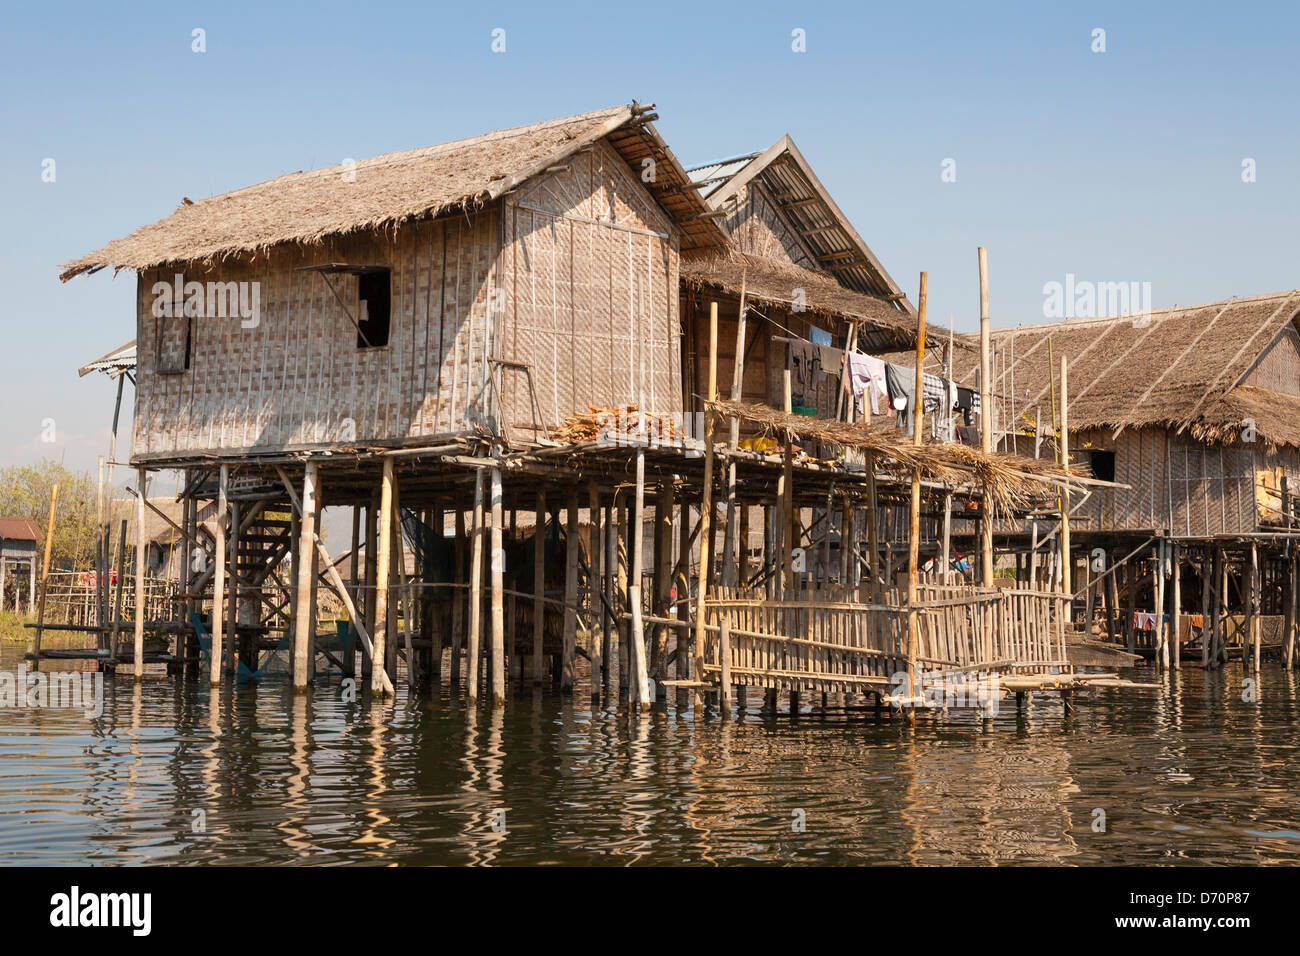 Lakeside houses built on stilts, Inle Lake, Shan State, Myanmar, (Burma) Stock Photo